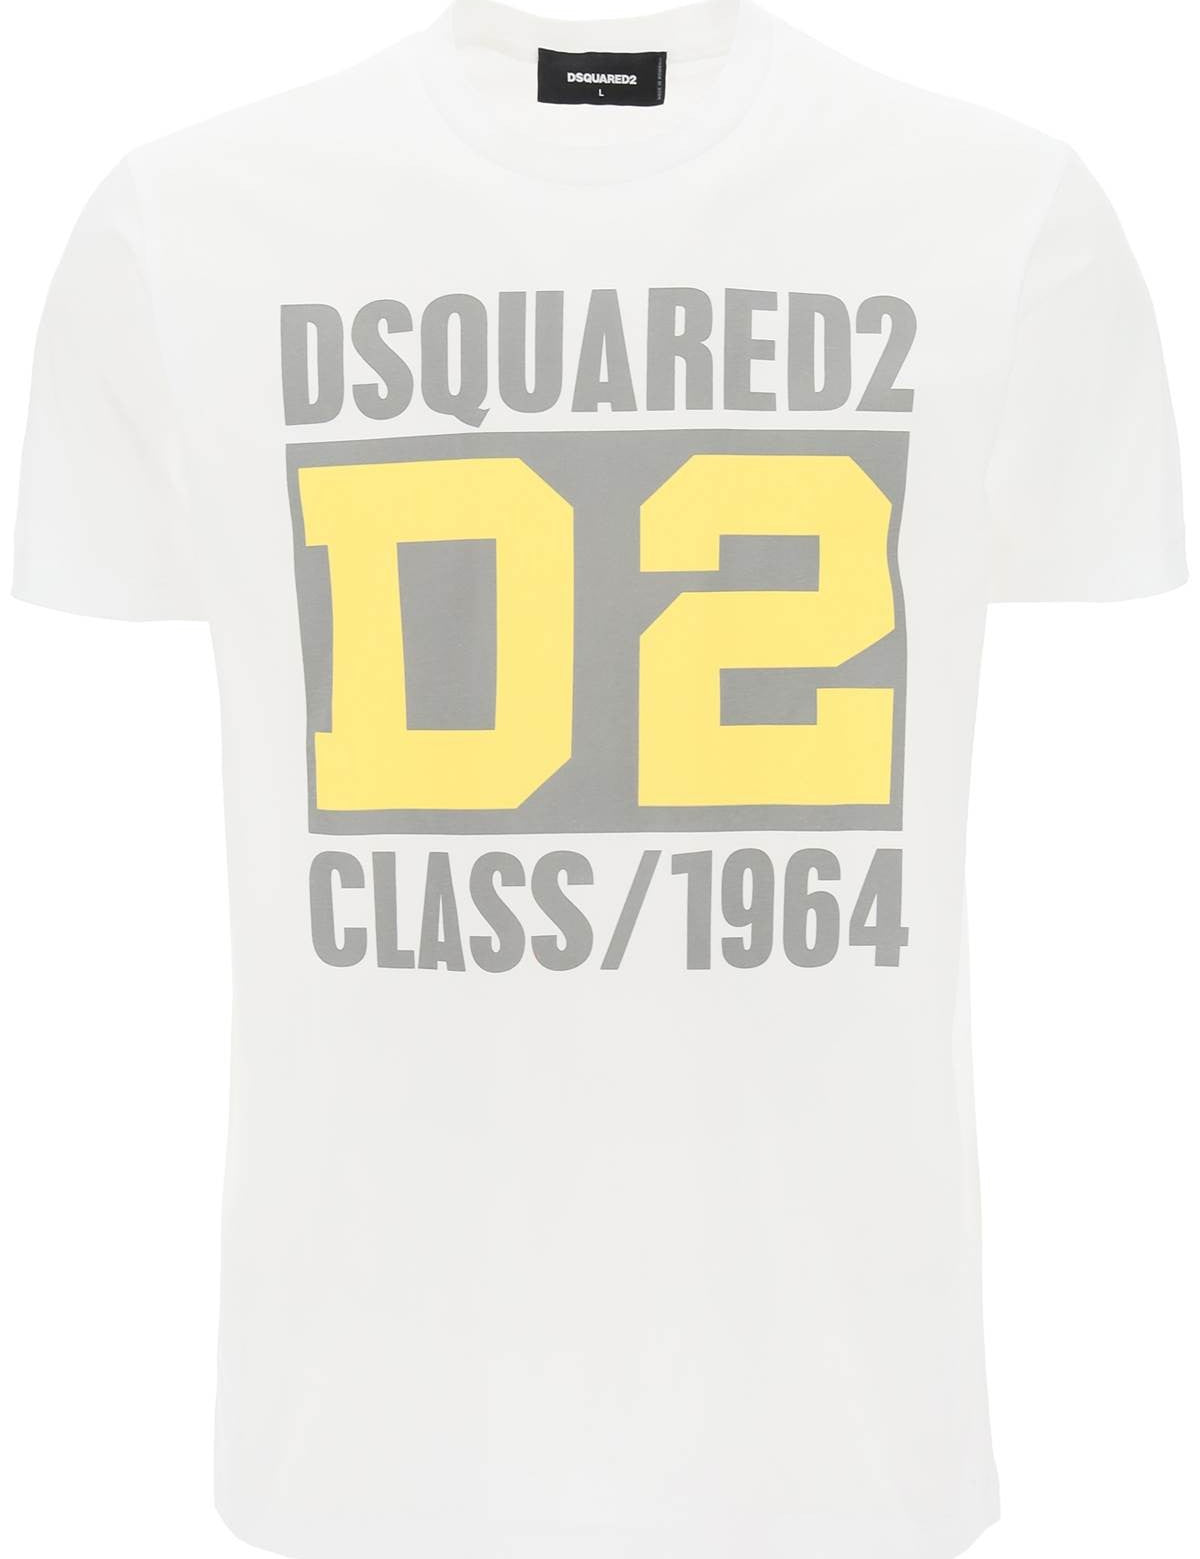 dsquared2-d2-class-1964-cool-fit-t-shirt.jpg